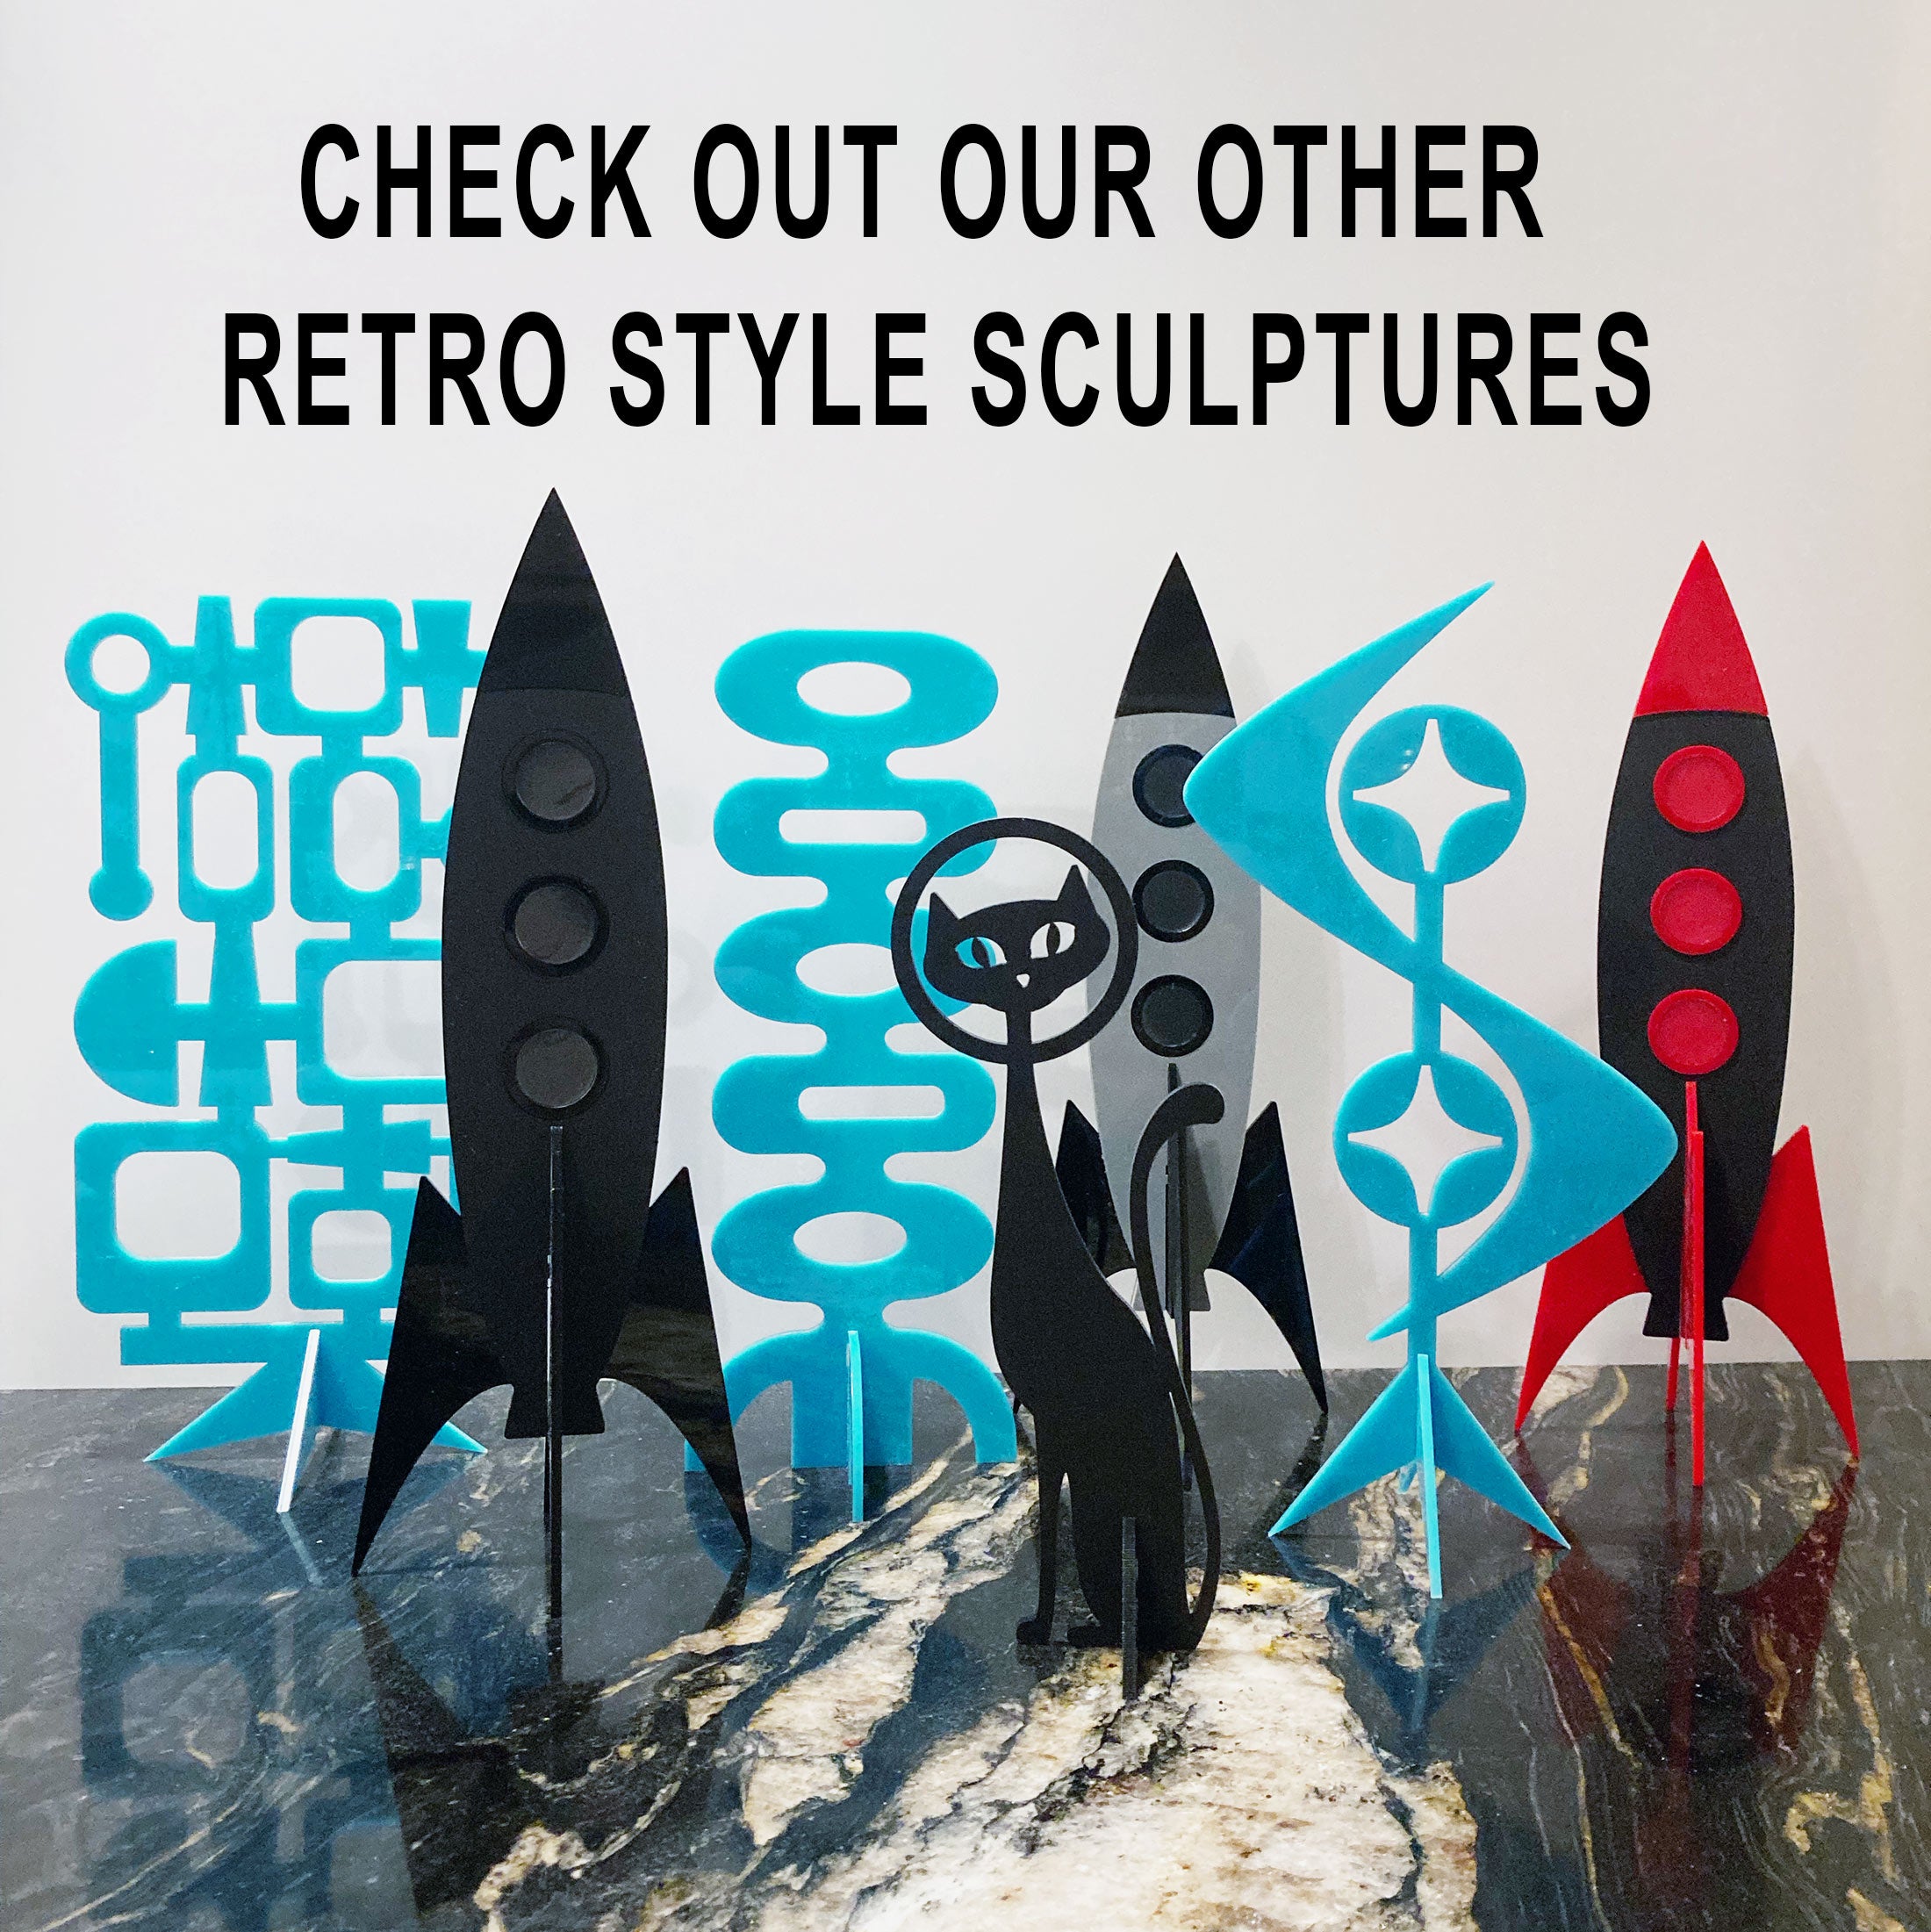 MCM Space Rocket with Atomic Black Cat | 3 Piece Mid Century Modern Sculpture Set | Vintage Space Art